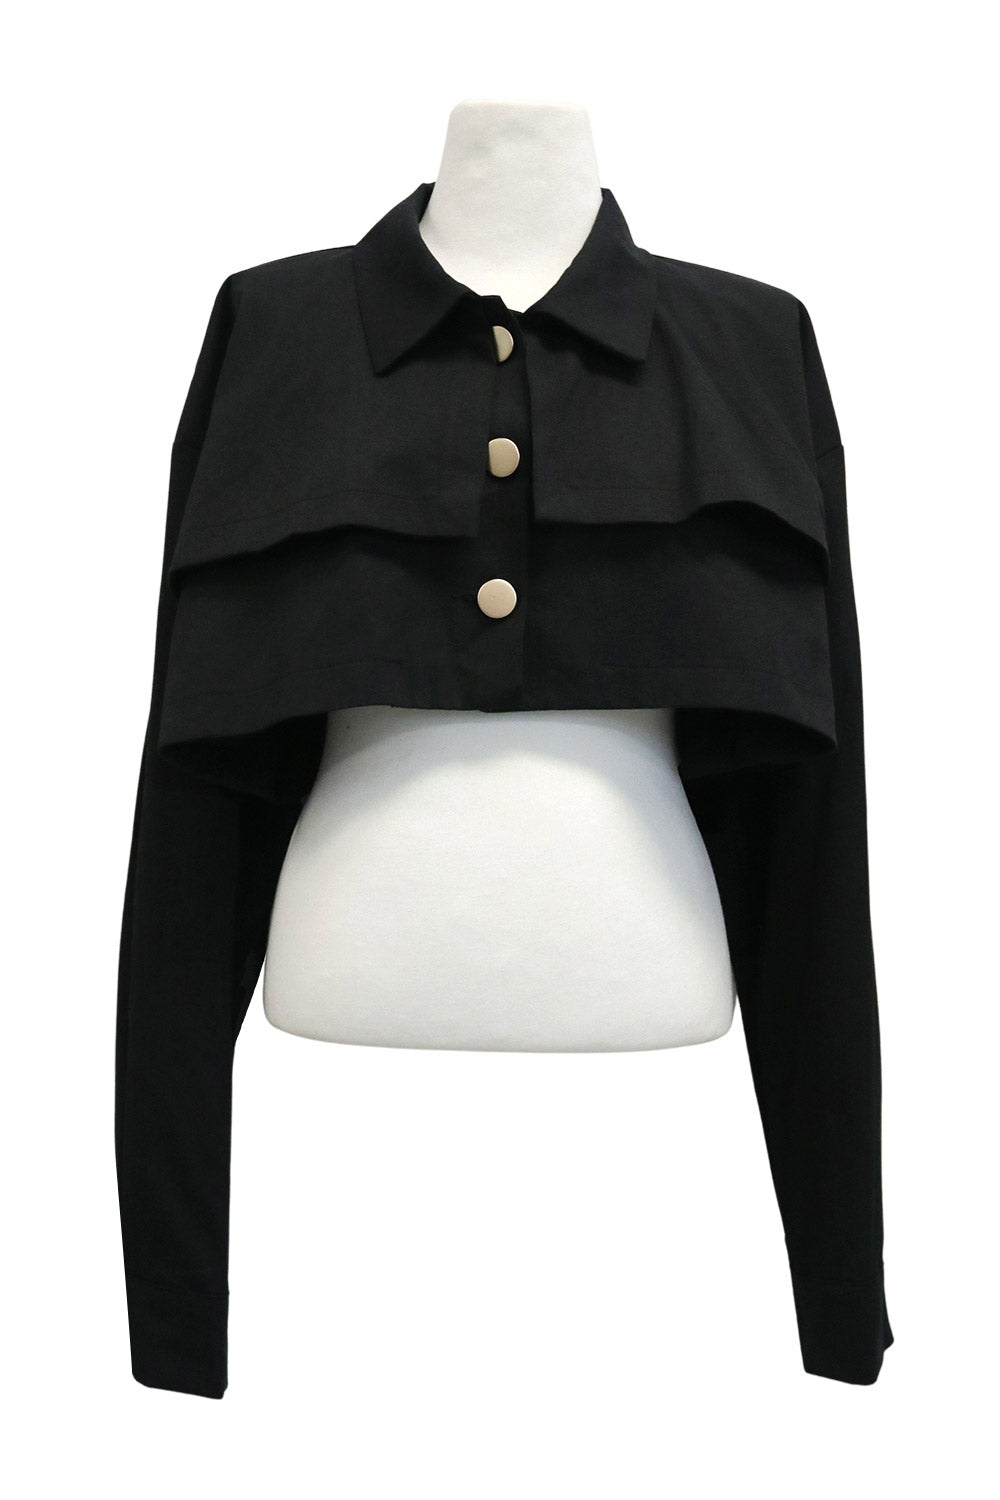 storets.com Tiffany Cropped Trench Jacket